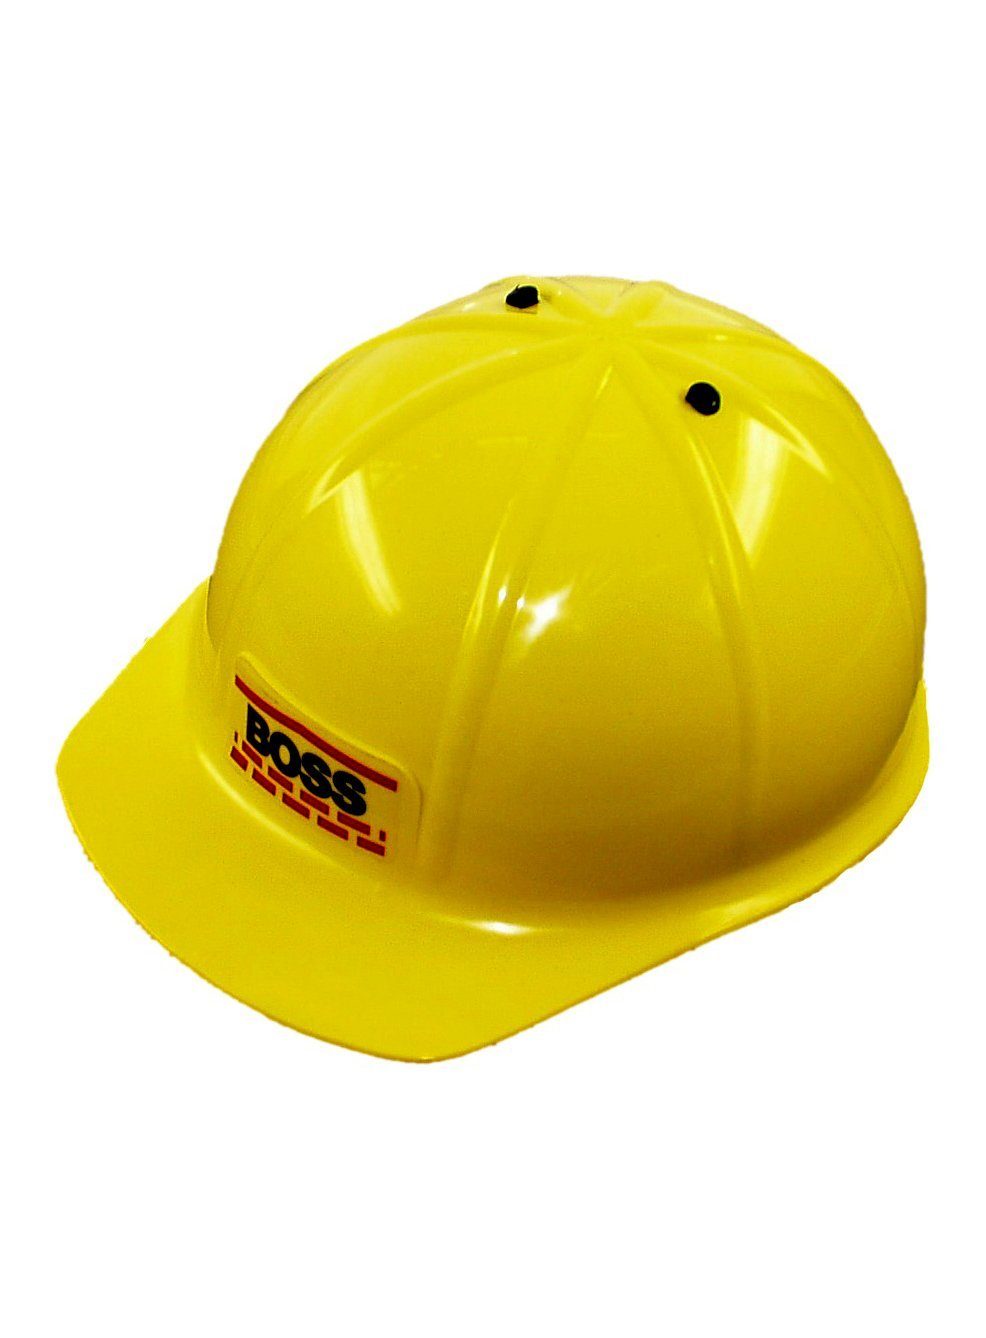 NO NAME Metamorph Kostüm Bauarbeiter Helm, Robuster Helm für 'Boss der Baumeister'